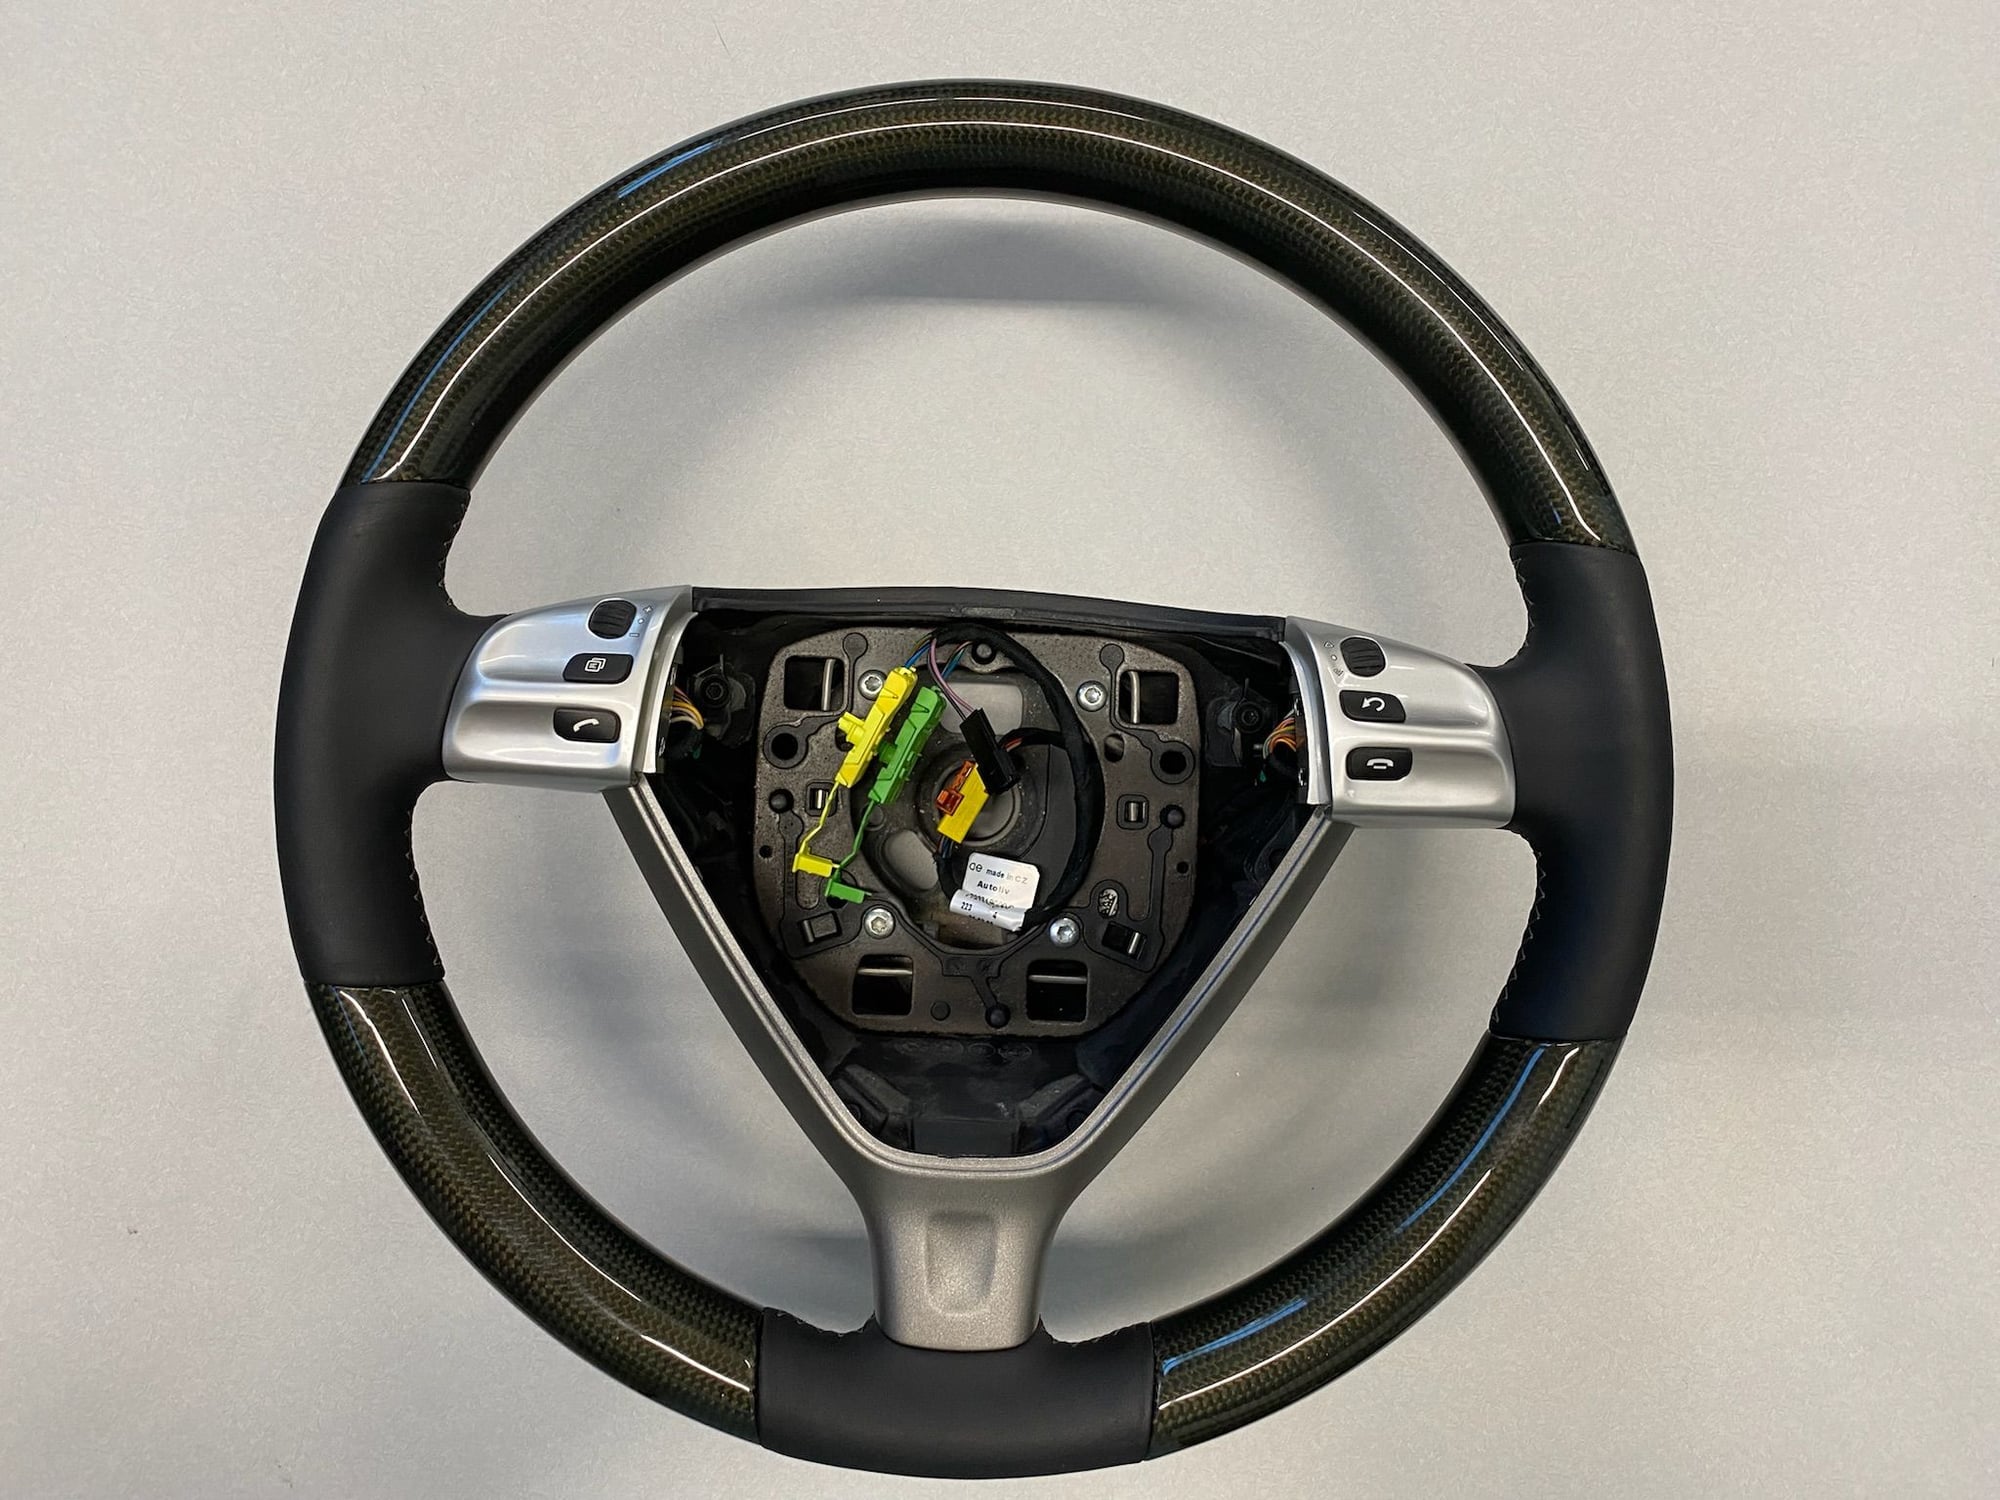 Steering/Suspension - Porsche 997/987 OEM Carbon Fiber & Black Leather Multifunction Steering Wheel - New - 0  All Models - Dallas, TX 75231, United States